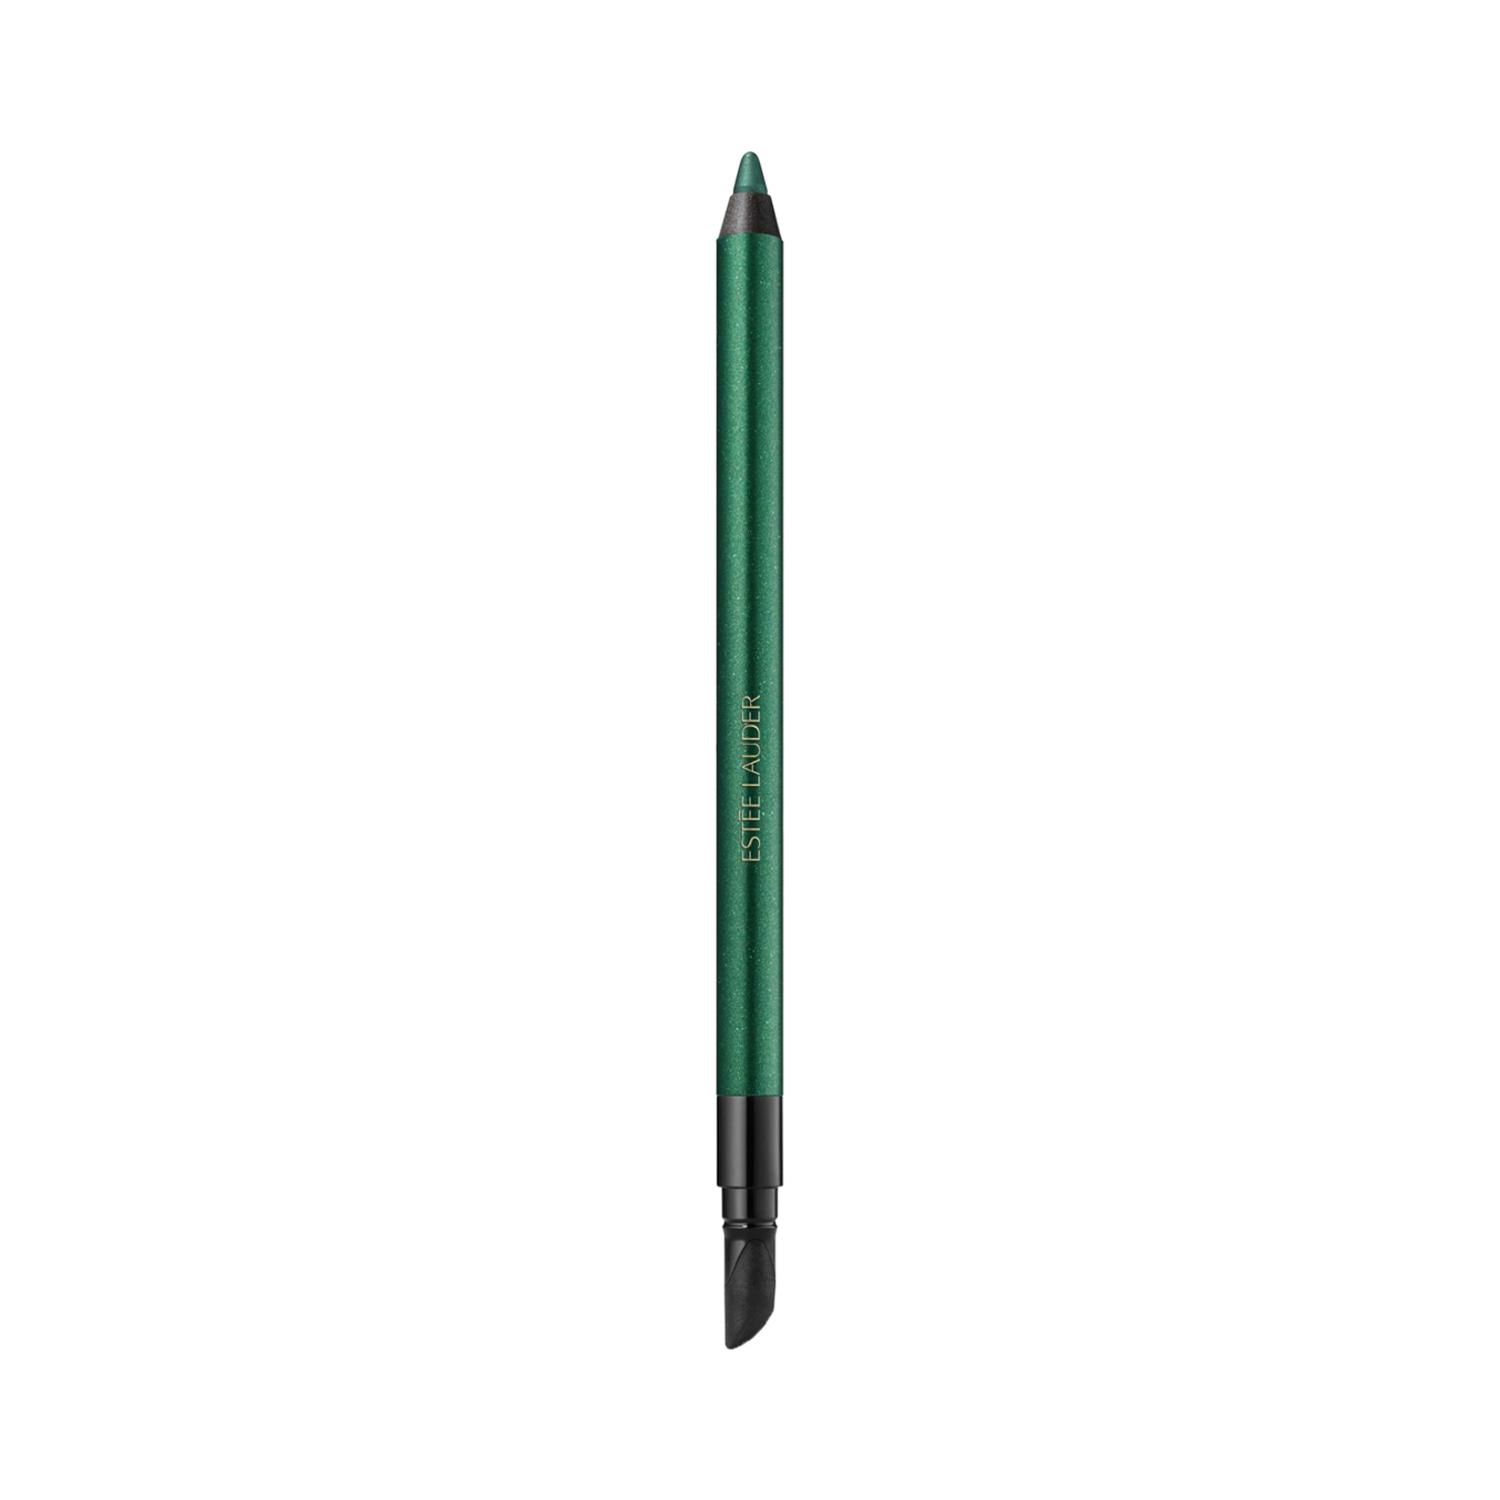 estee lauder double wear 24h waterproof gel eye pencil - emerald volt (1.2g)